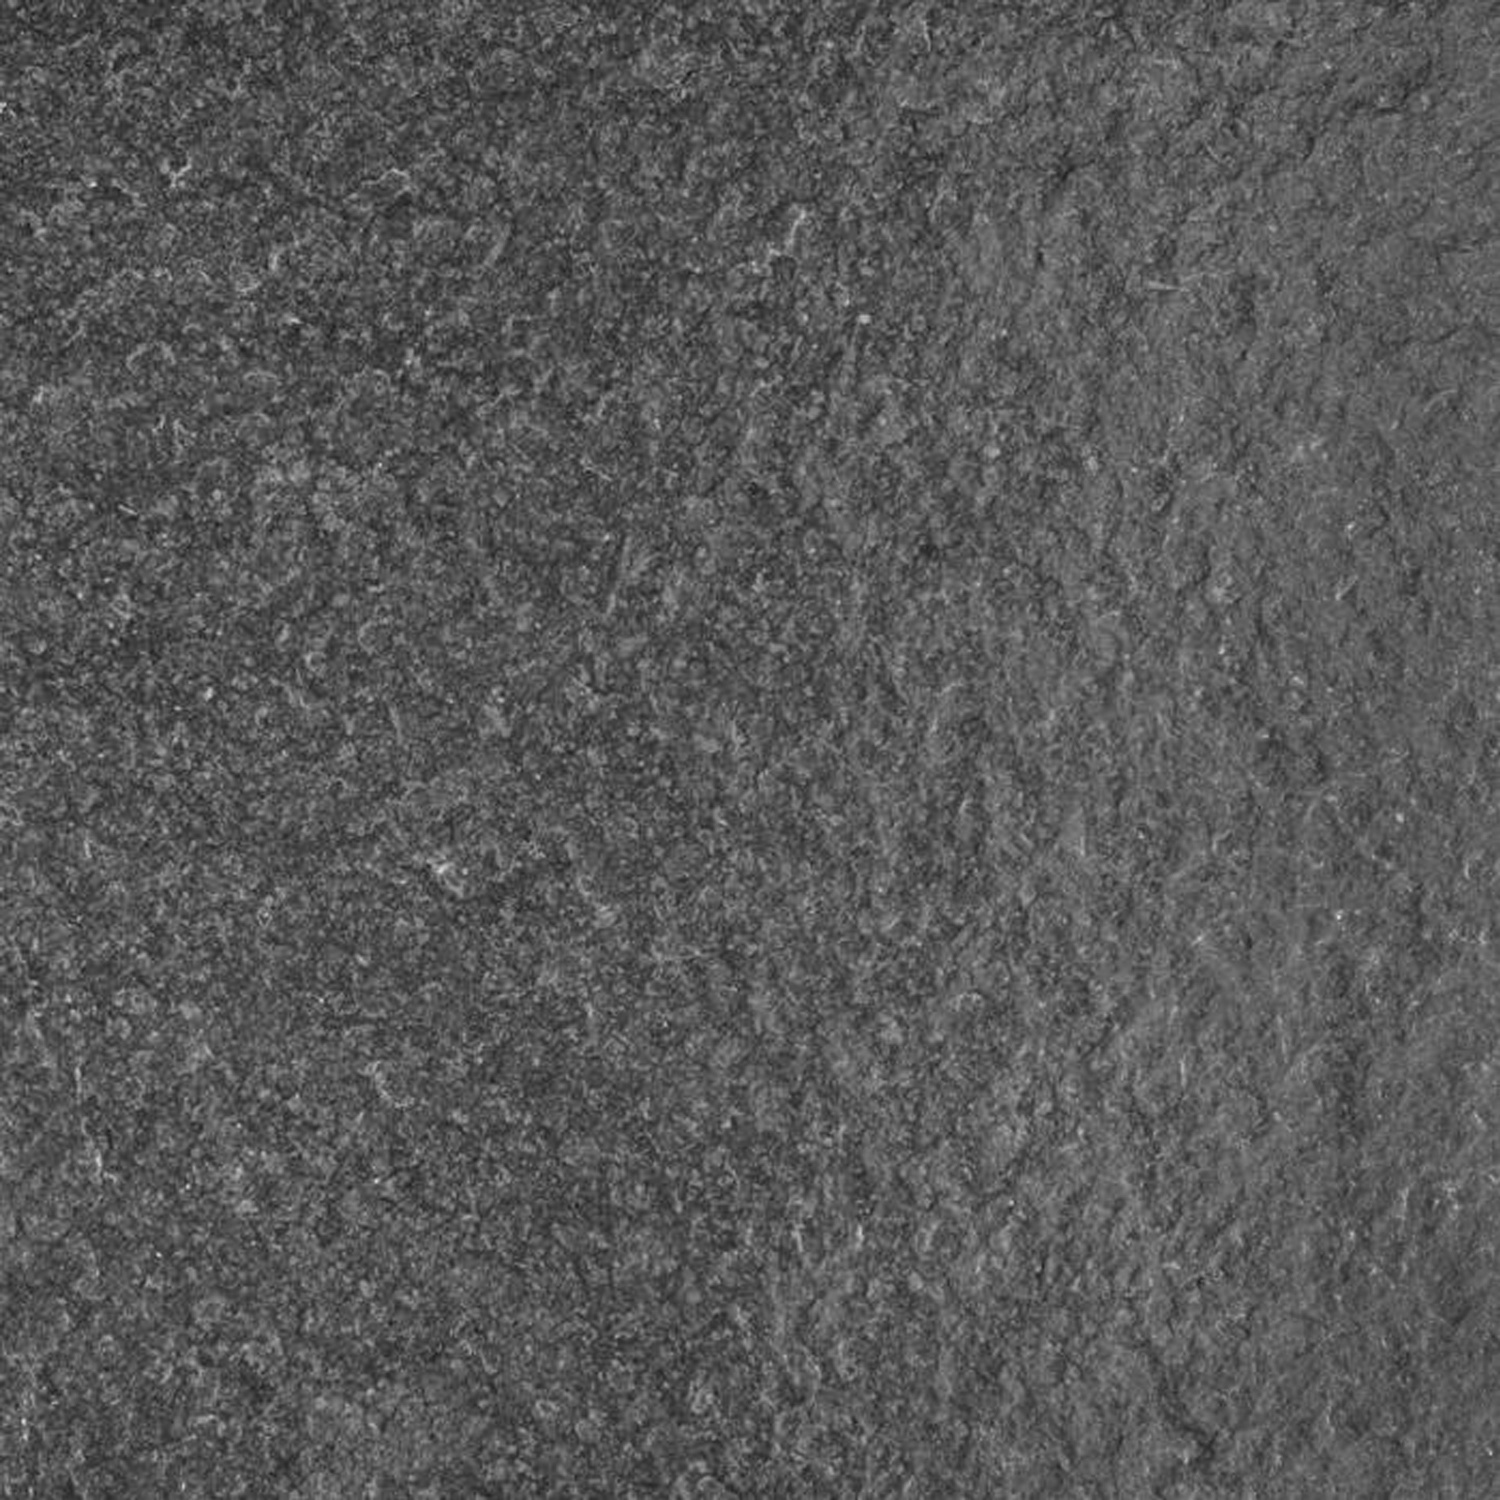  Vensterbank Nero Assoluto graniet Anticato gevlamd 2 cm dik - OP MAAT- 10-70 cm breed - 10-230 cm lang - Absolute black zwart graniet gebrand